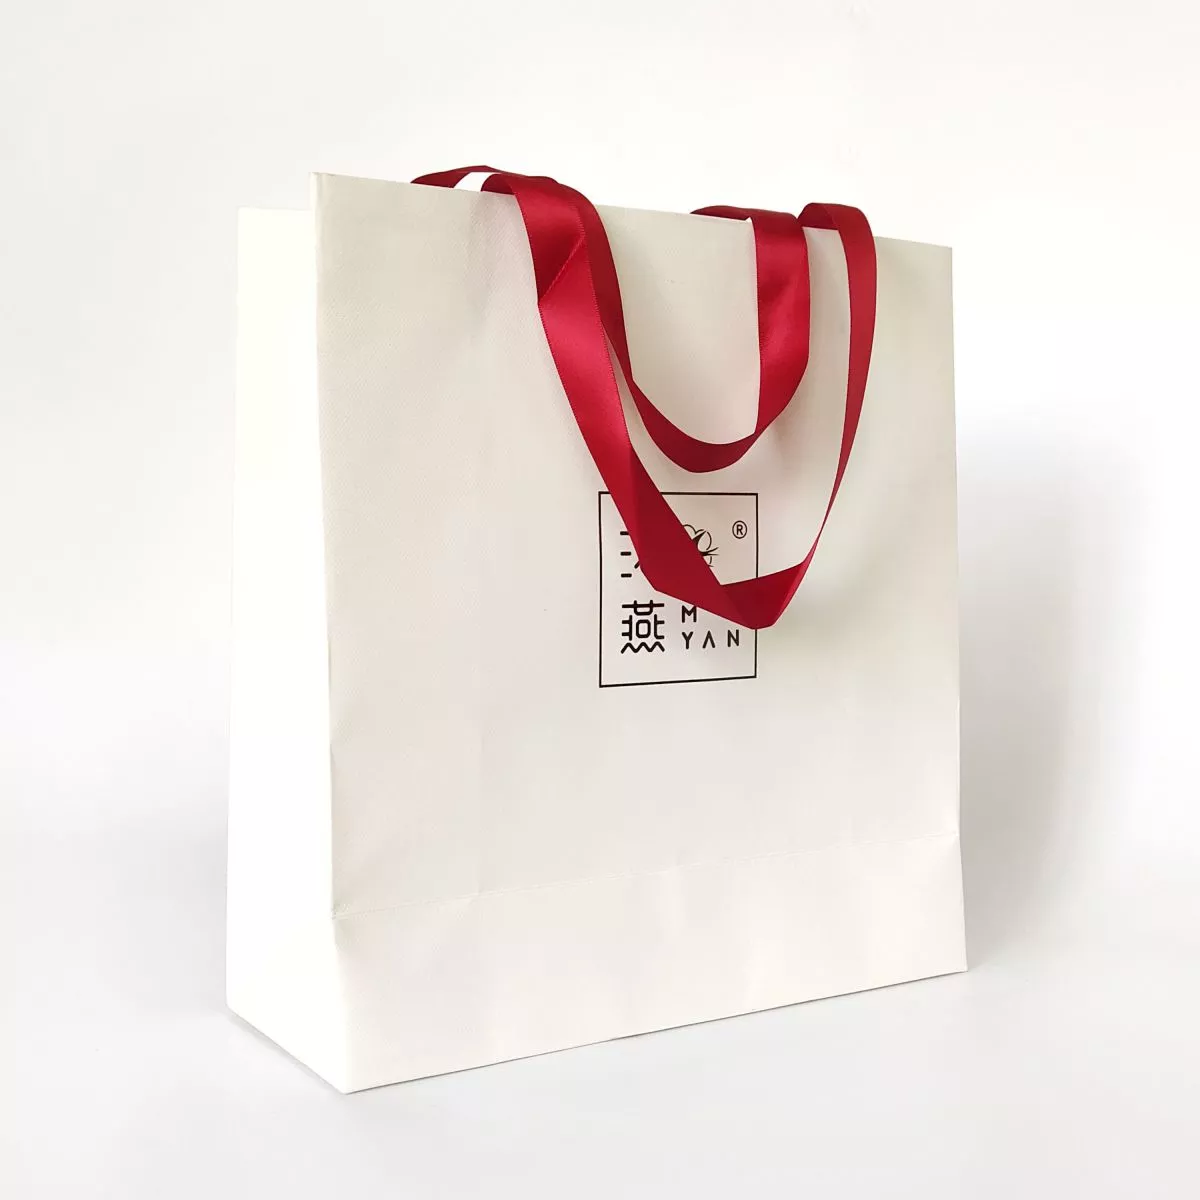 GB020 Printed Paper Shopping Bag with Ribbon Handles